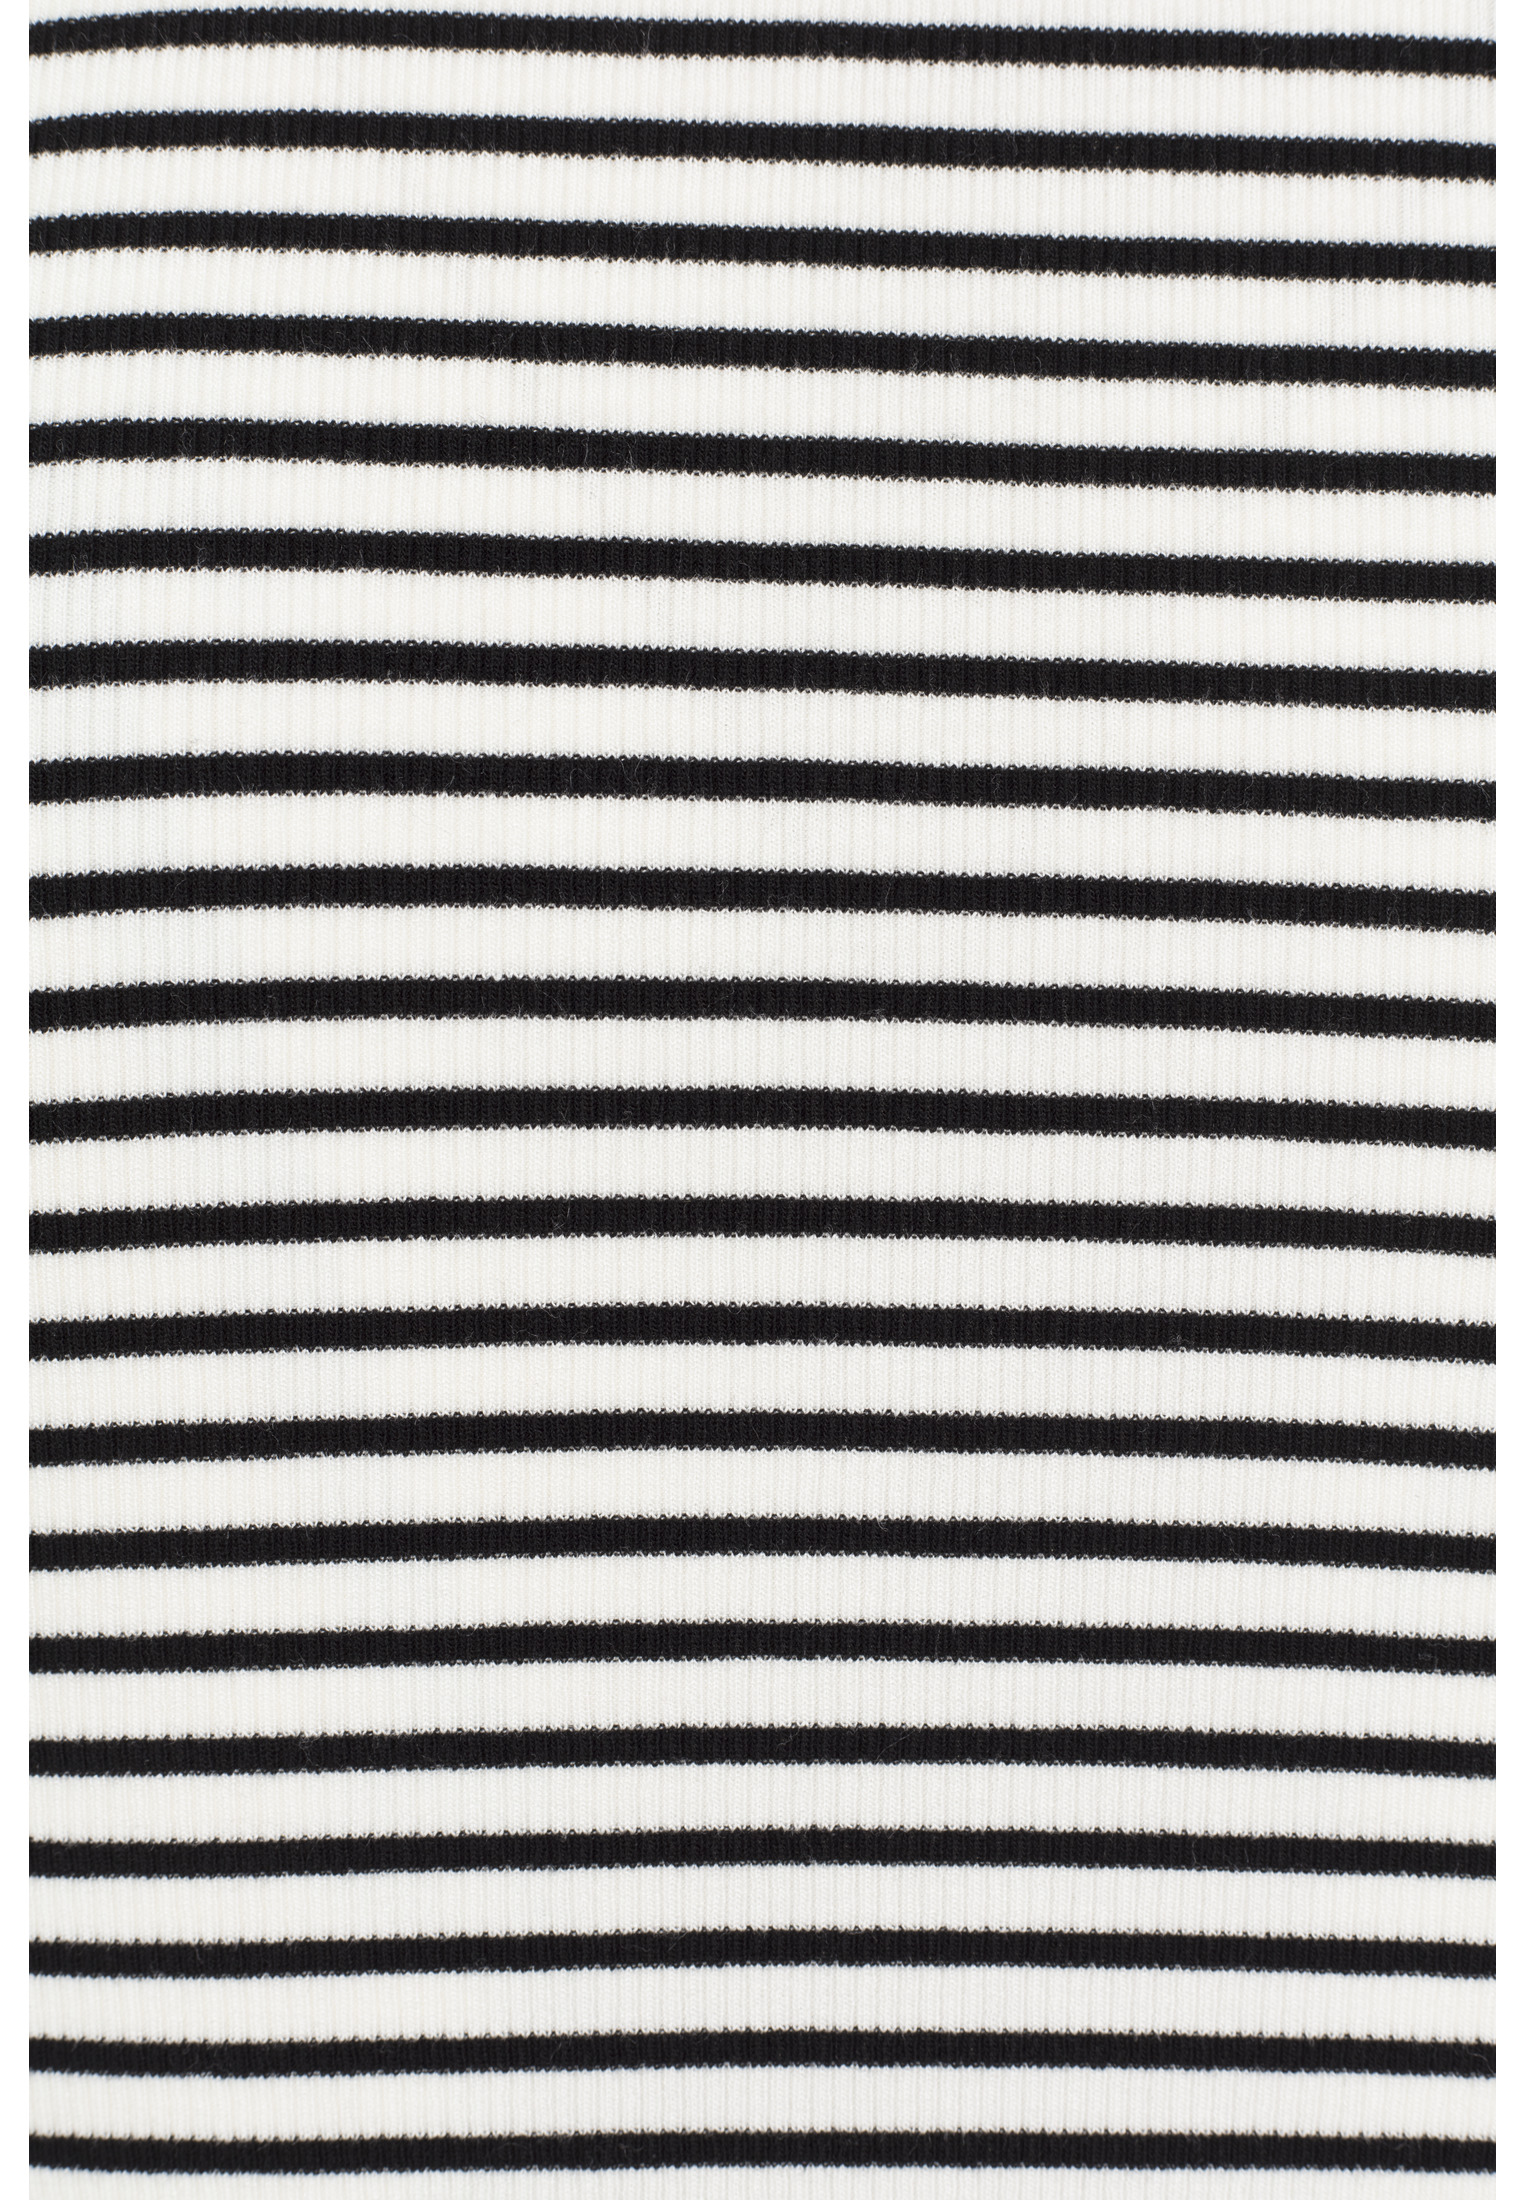 Ladies Striped Turtleneck Dress-TB1709